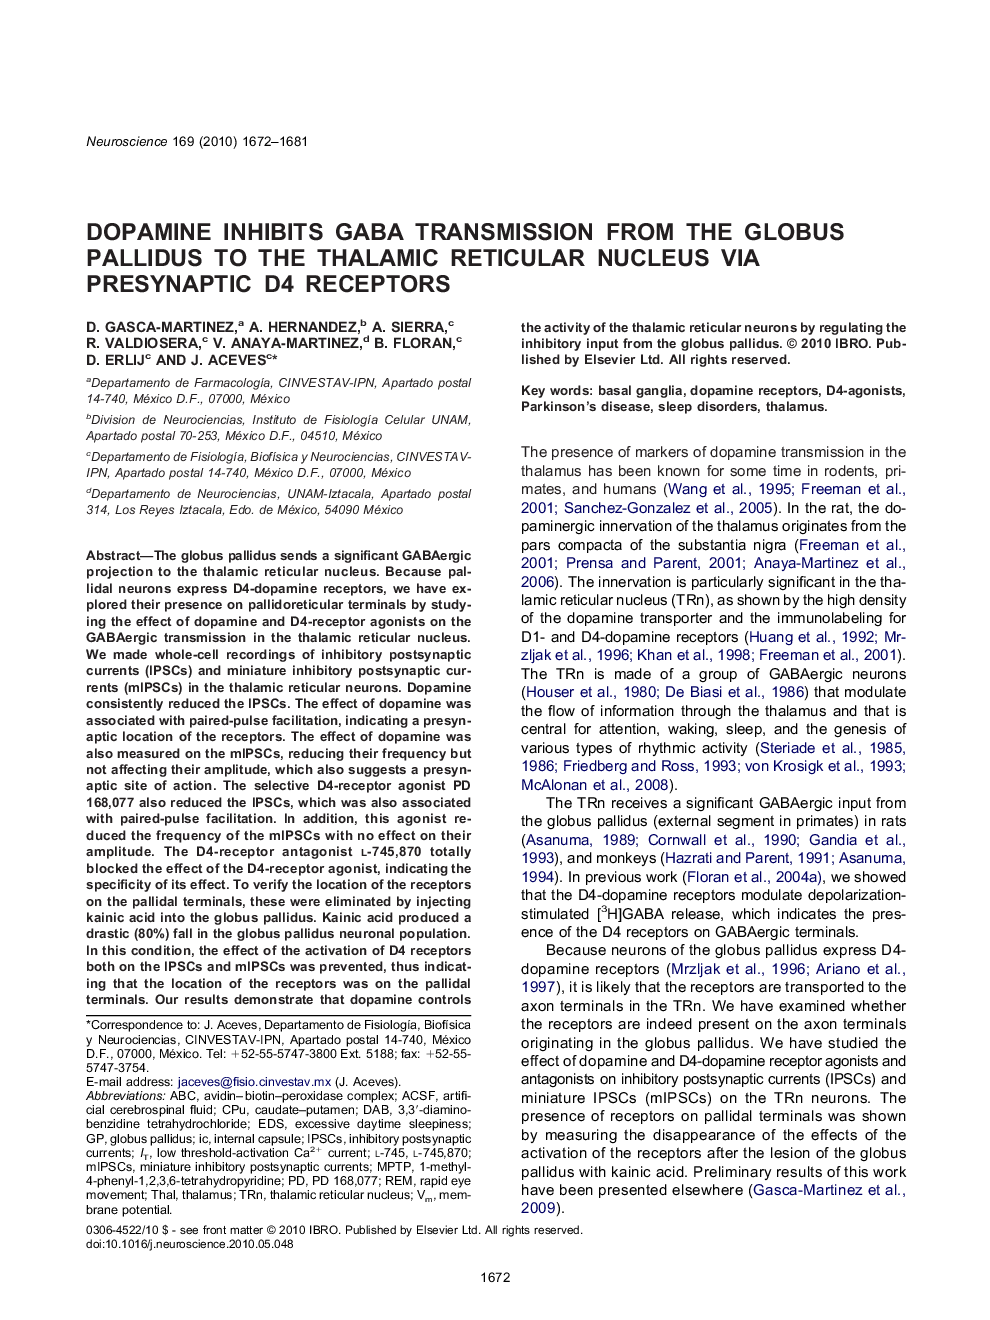 Dopamine inhibits GABA transmission from the globus pallidus to the thalamic reticular nucleus via presynaptic D4 receptors